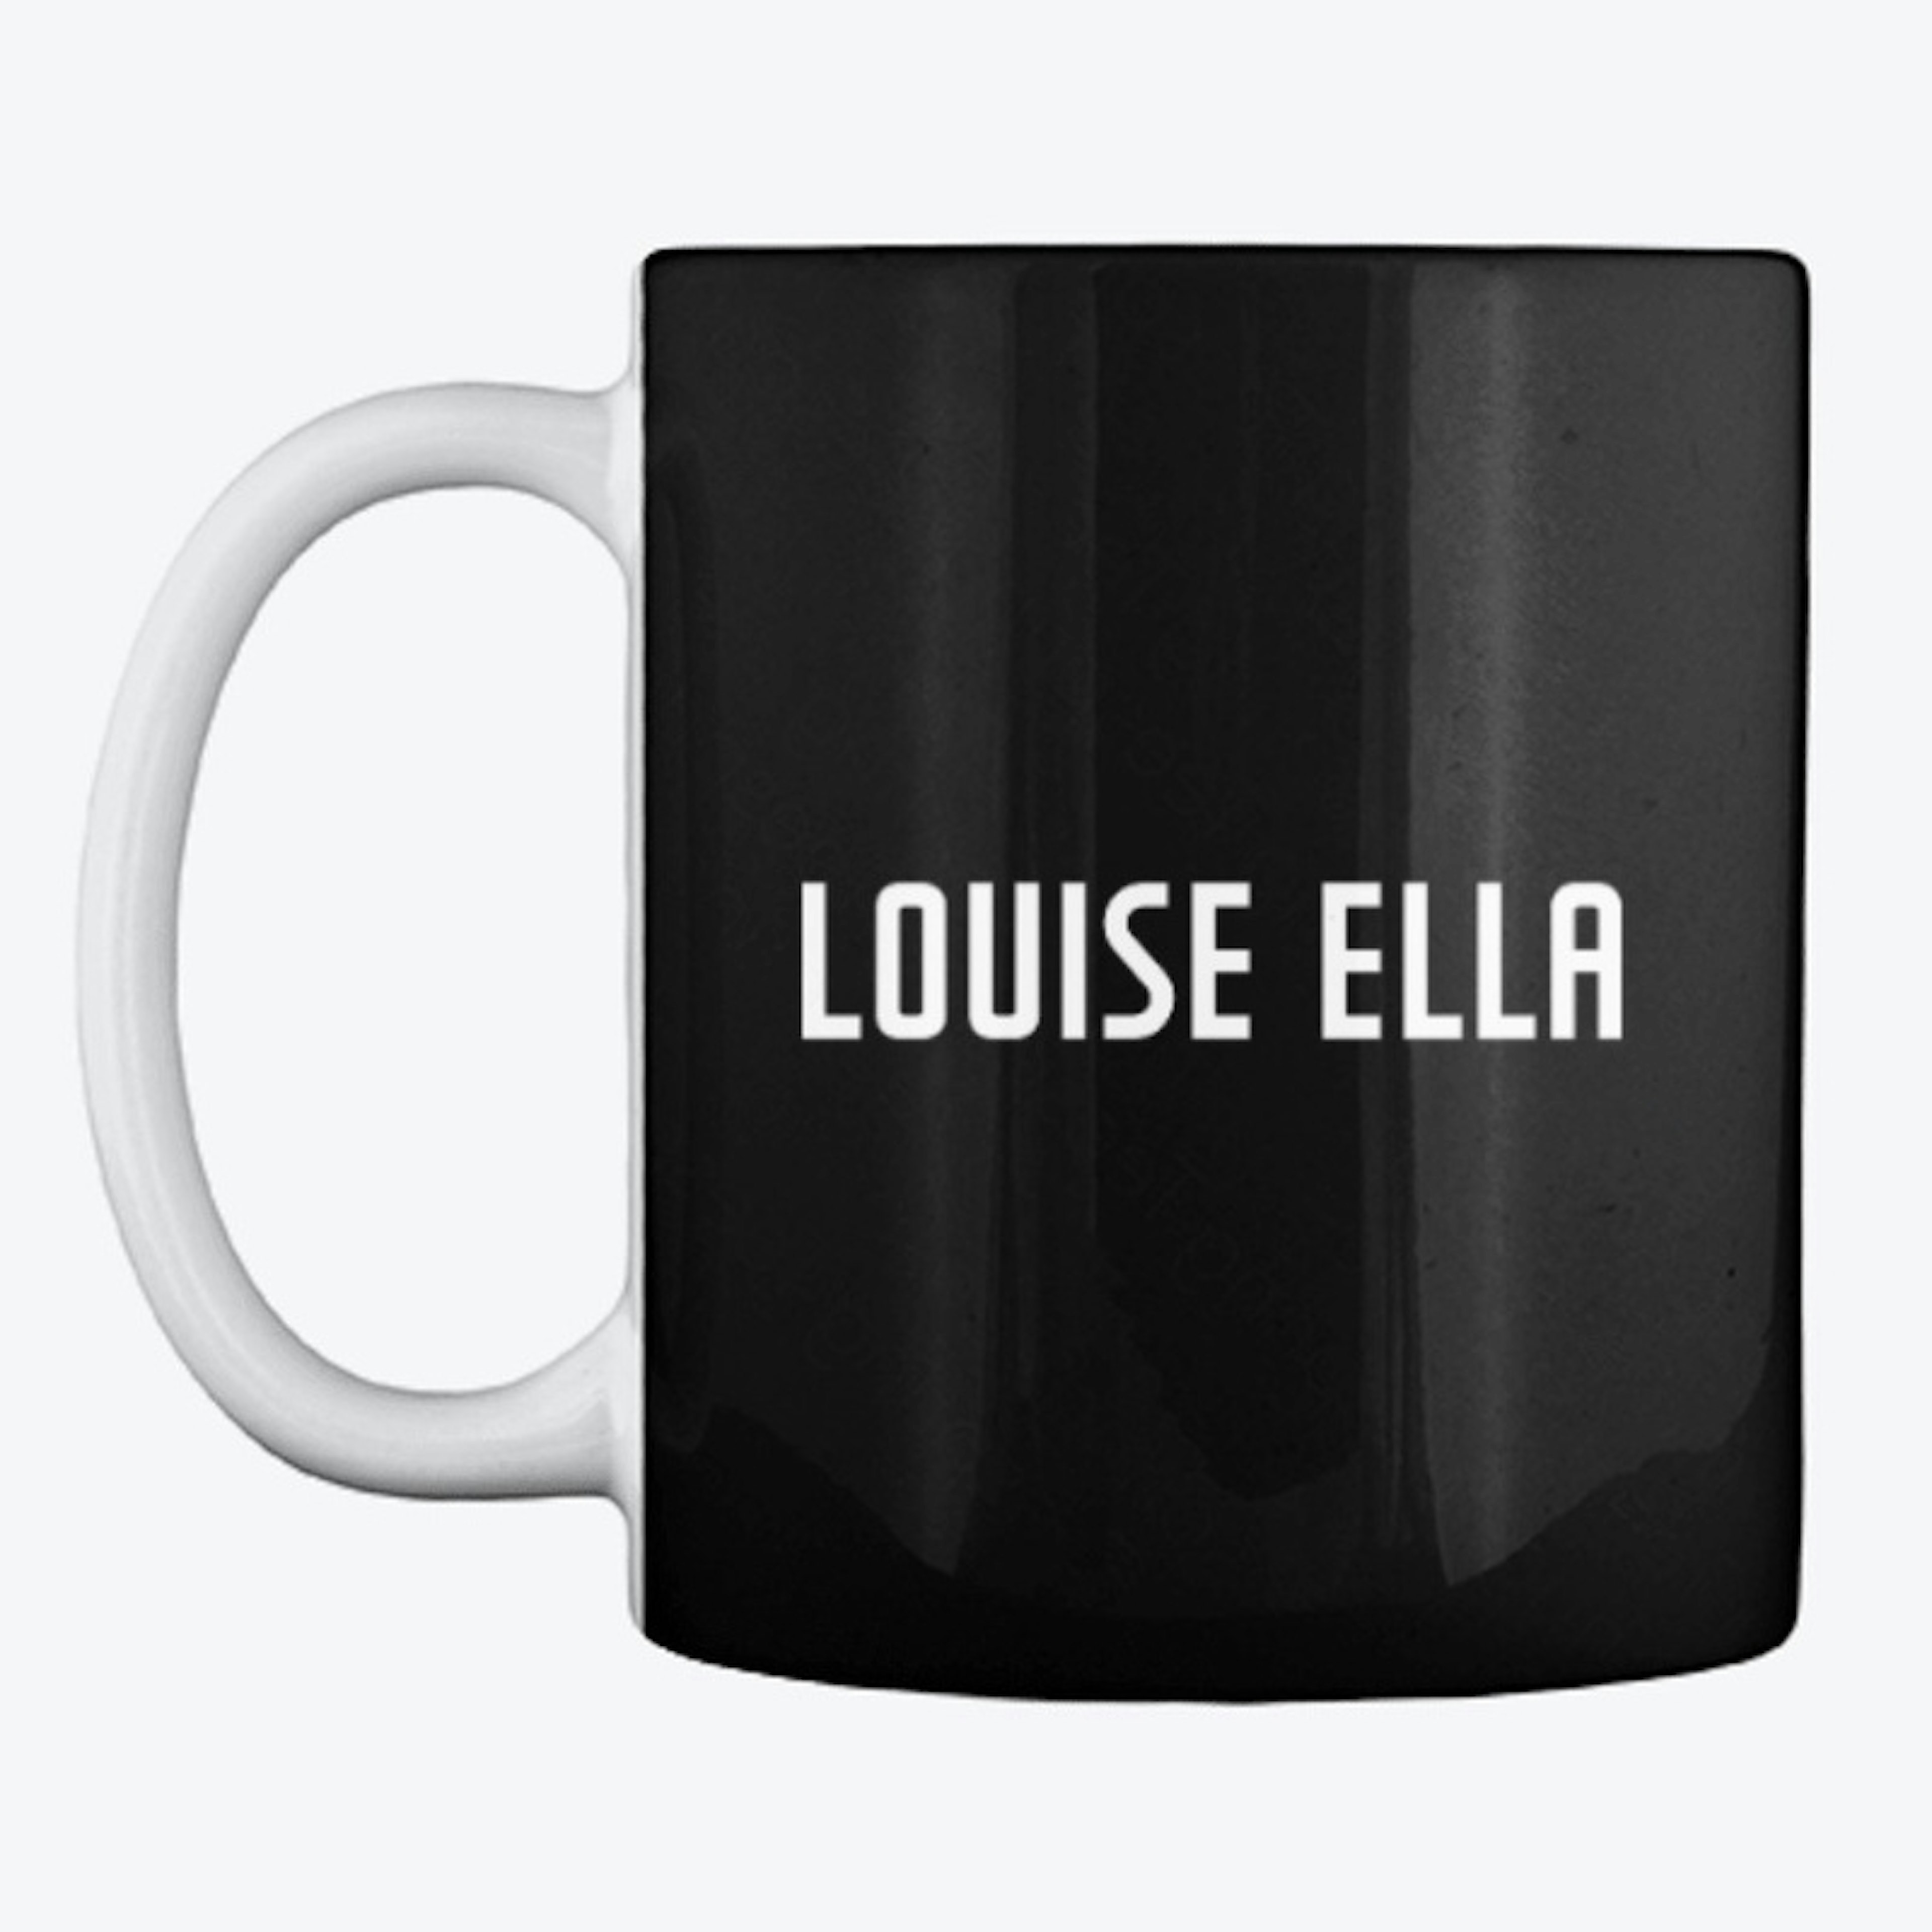 Louise Ella Loulabellee Coffee Mug